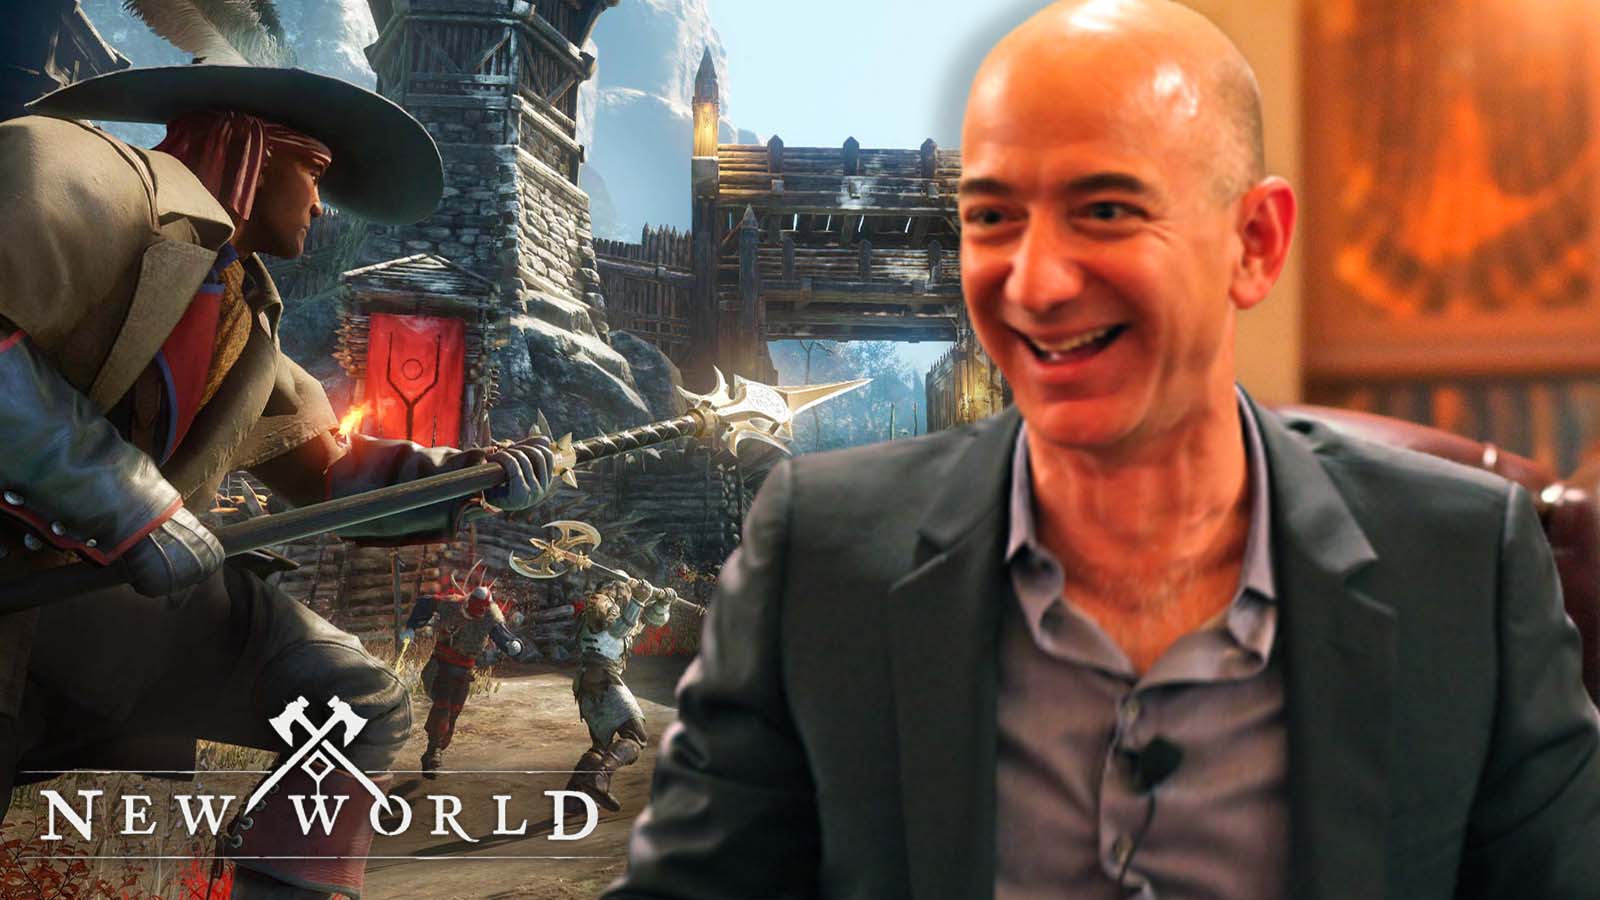 Jeff Bezos puts full support behind New World despite setbacks